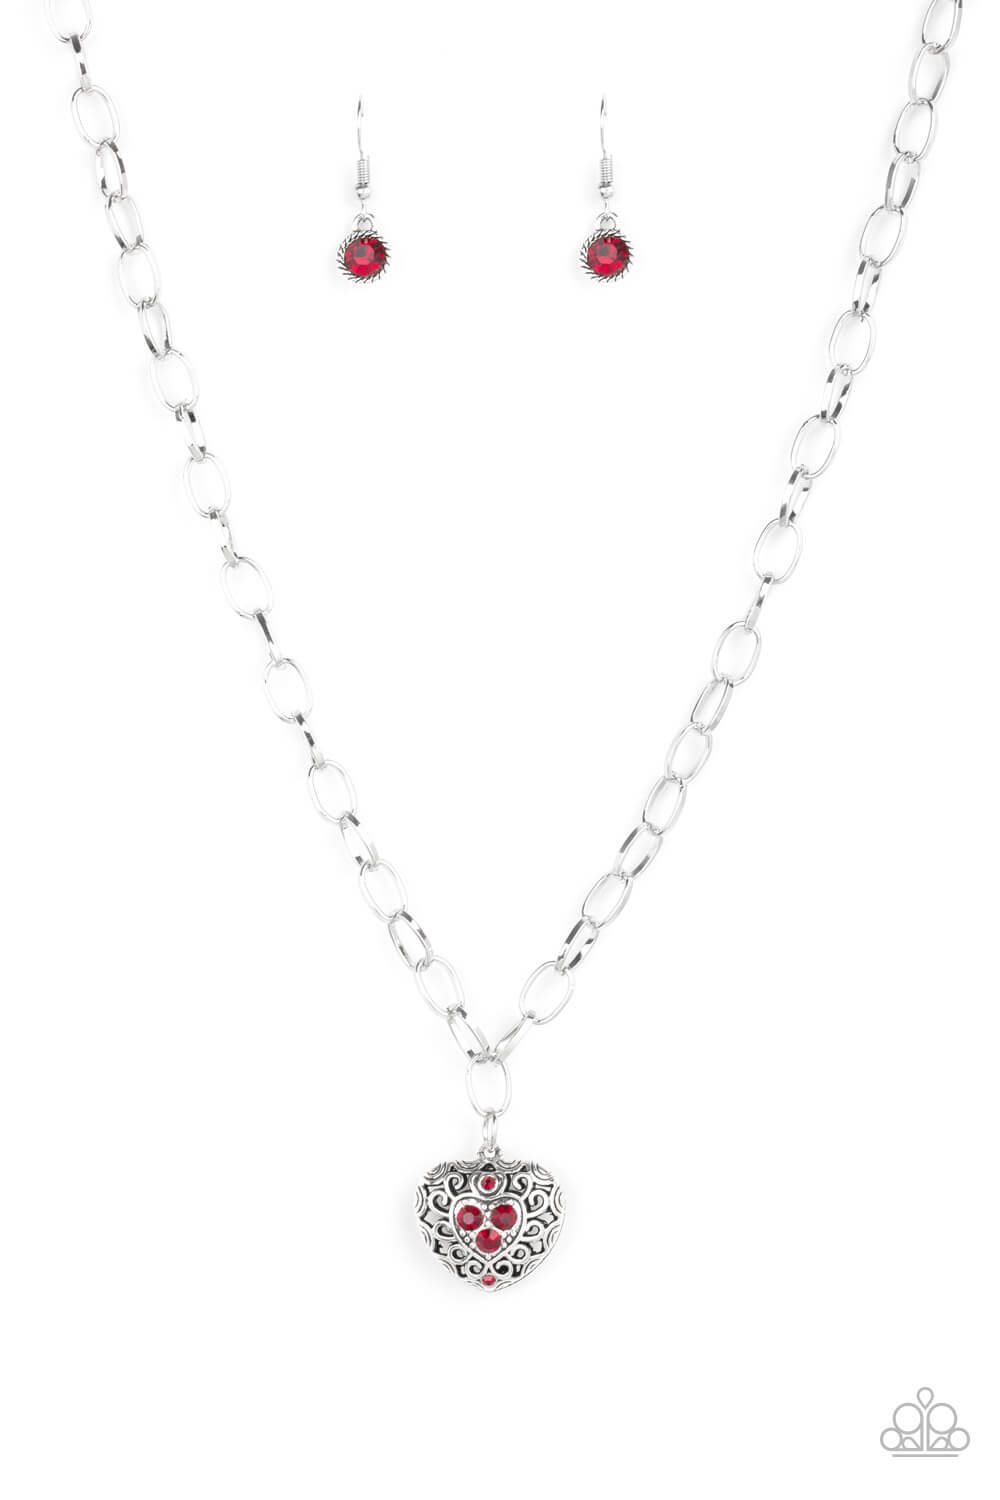 No Love Lost Set - Red Heart Necklace Set - Princess Glam Shop